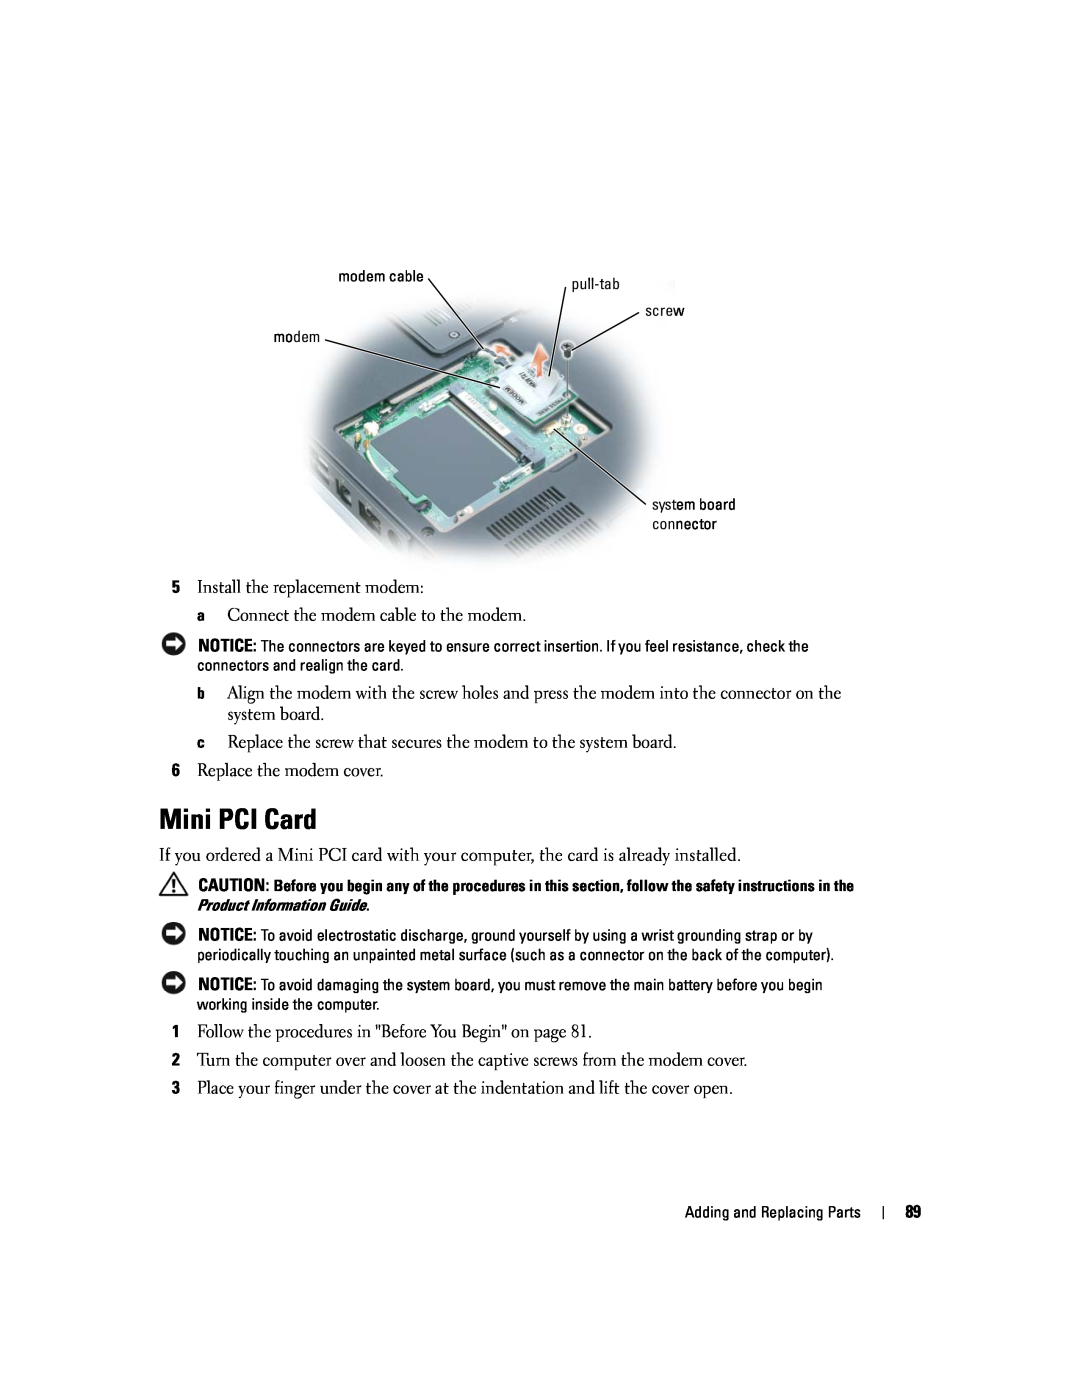 Dell 9300 owner manual Mini PCI Card 